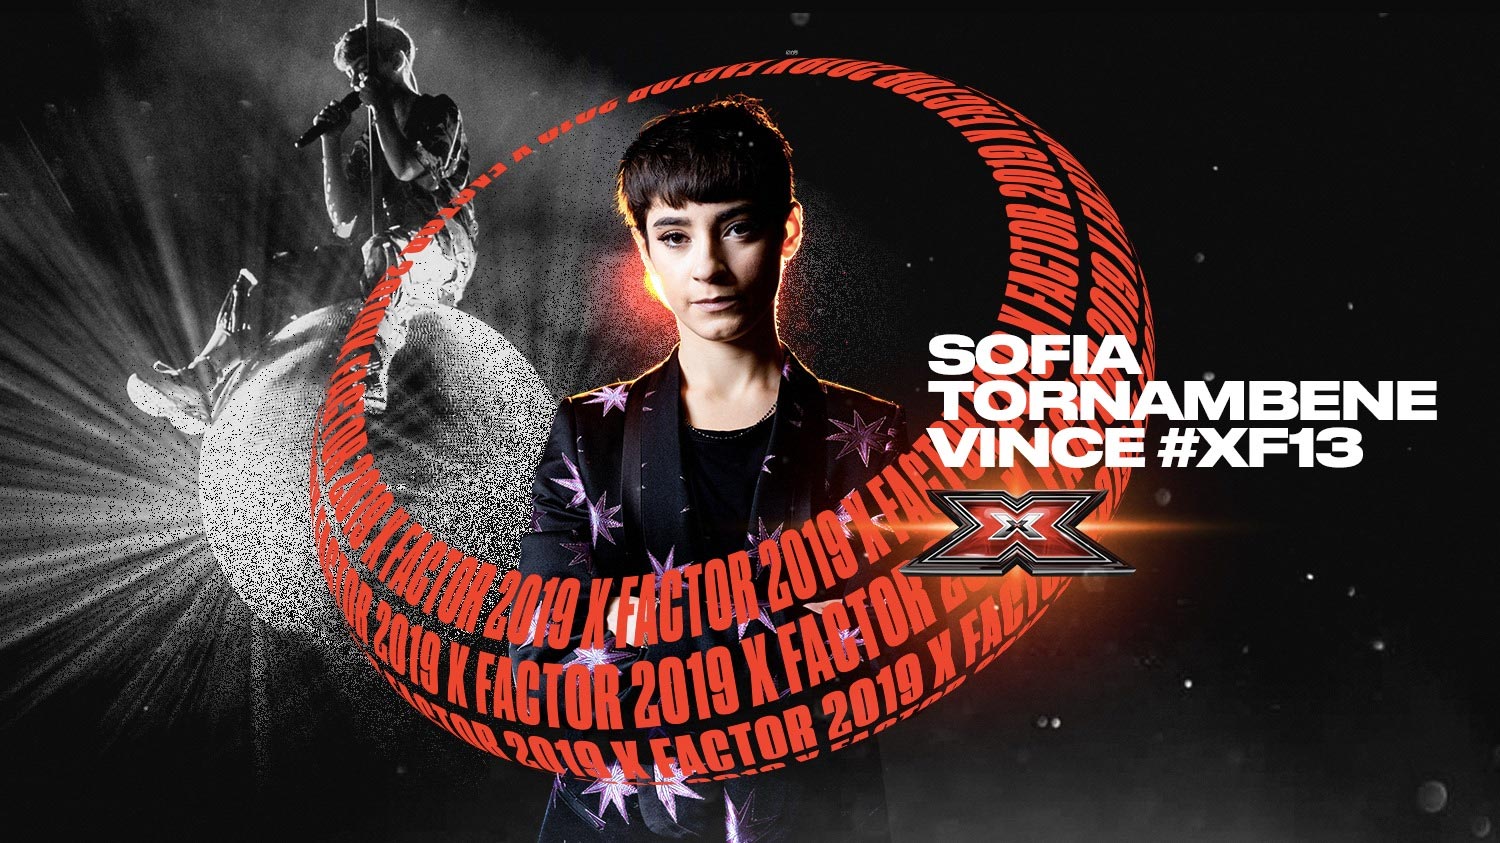 X Factor 2019, Sofia ha vinto